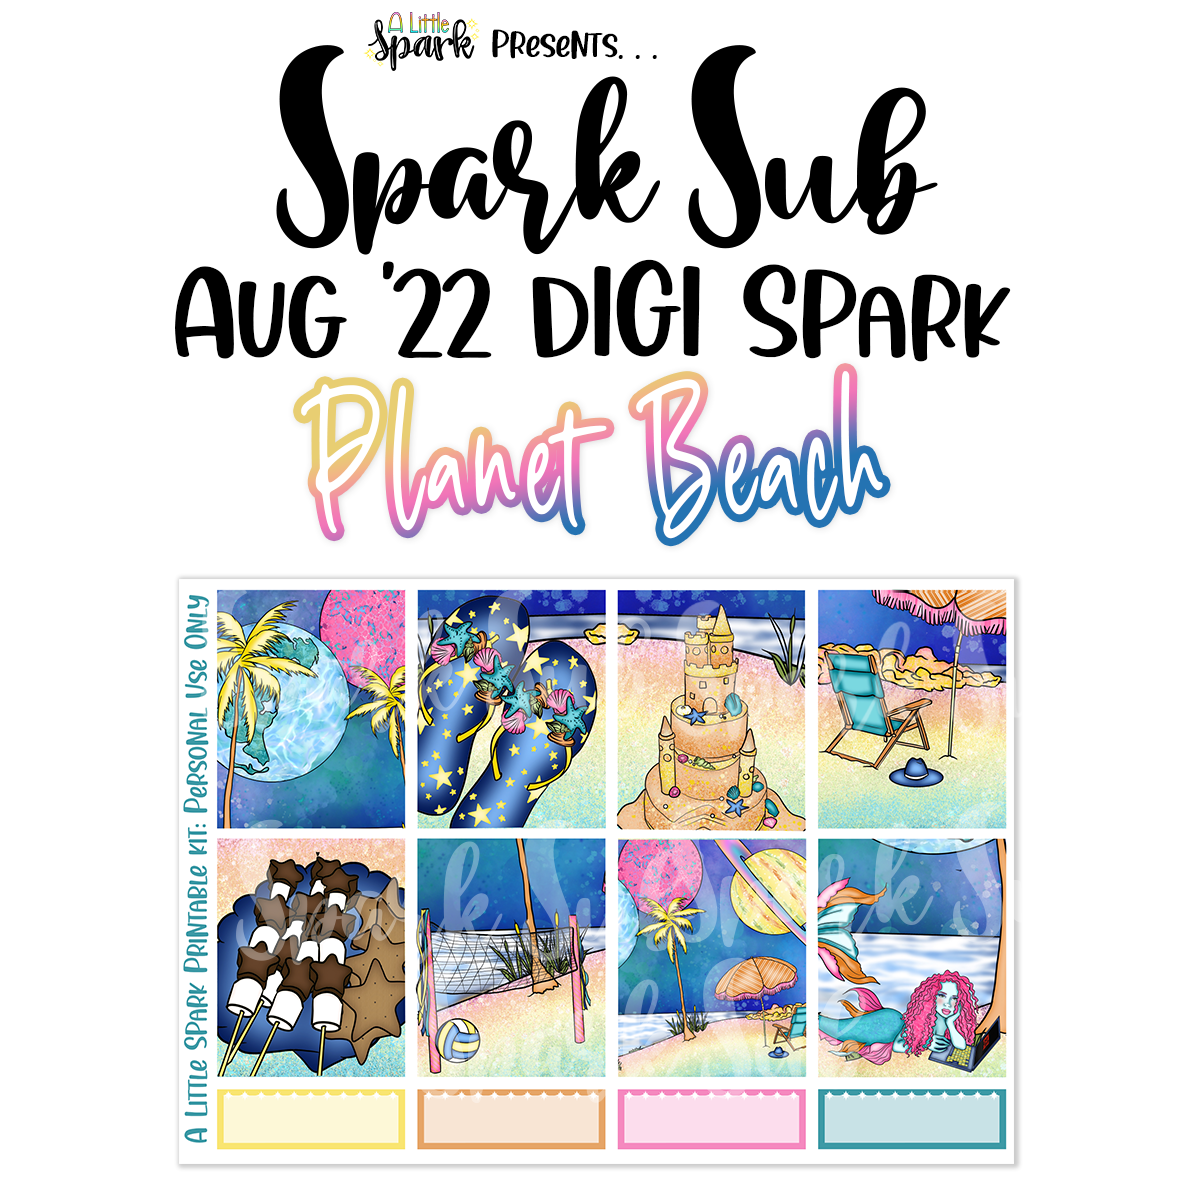 Digi Spark: Planet Beach ONE TIME PURCHASE